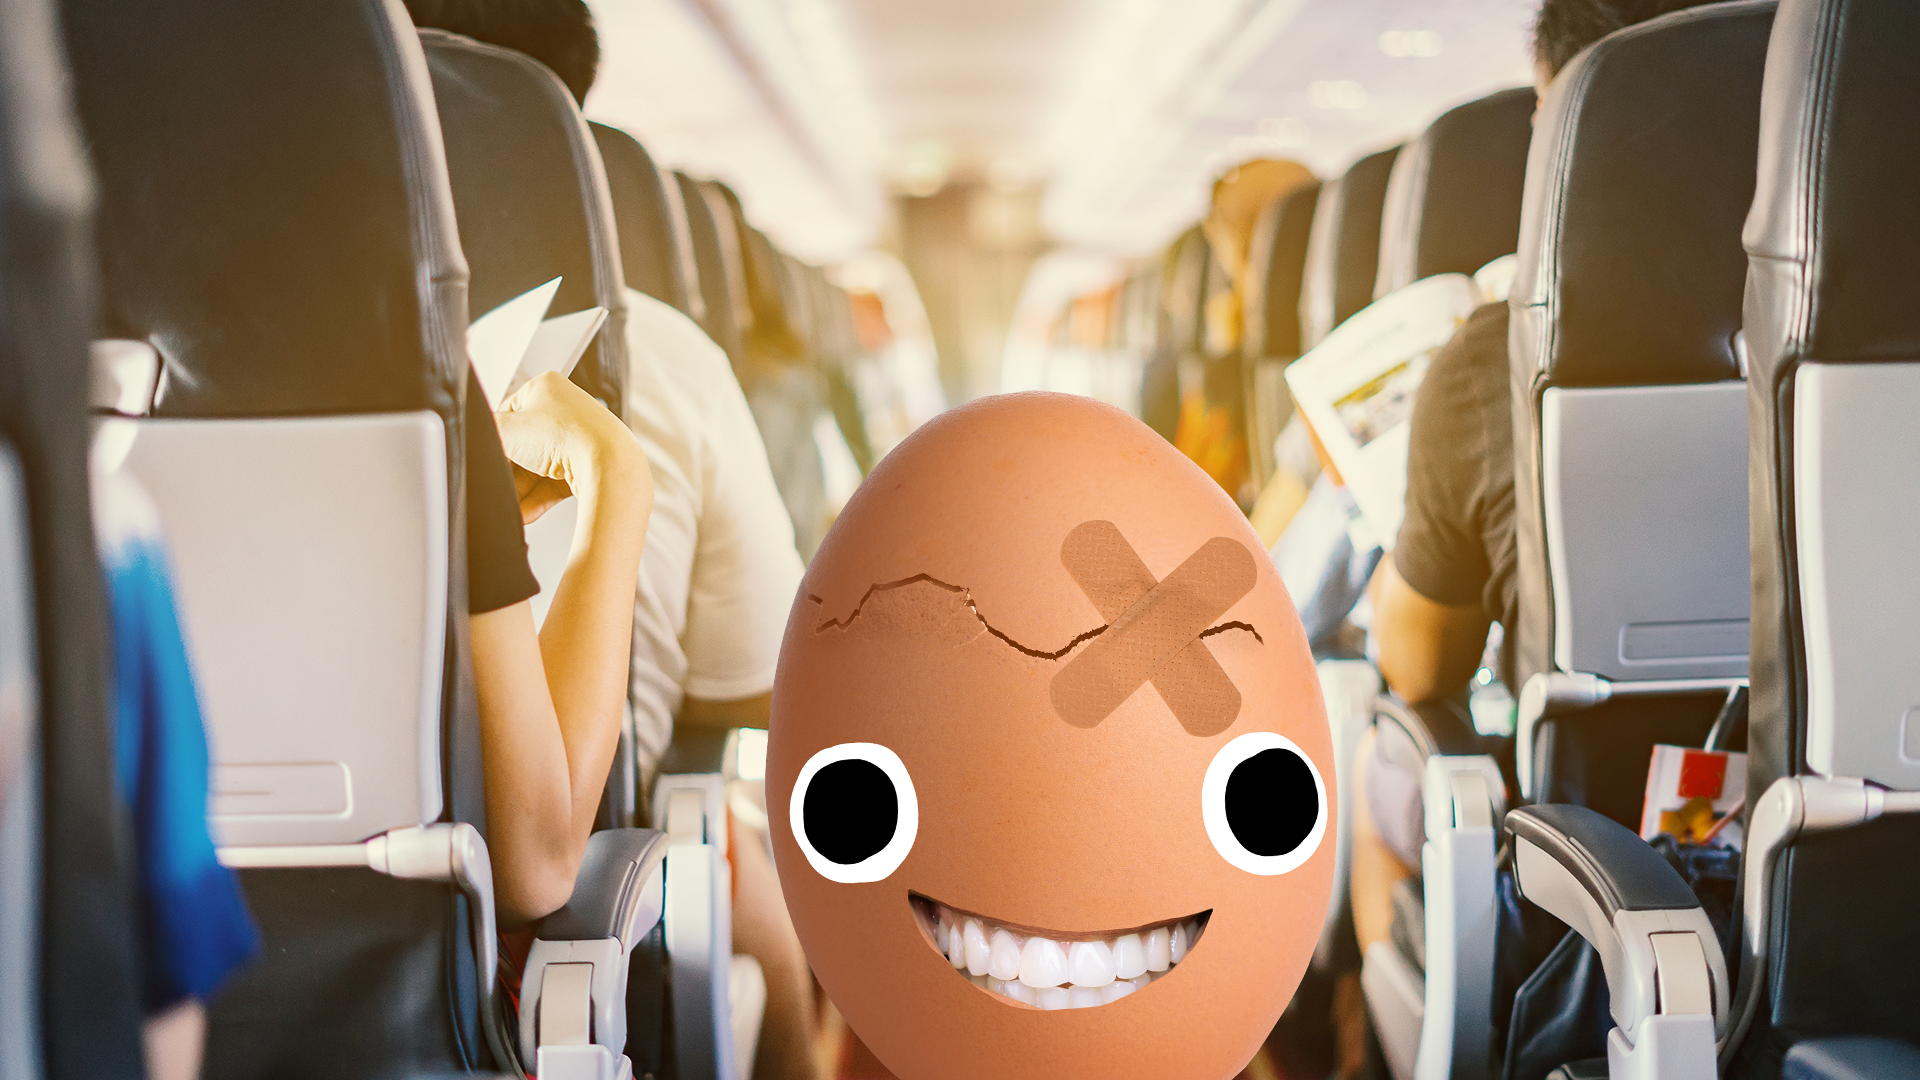 An egg on a plane